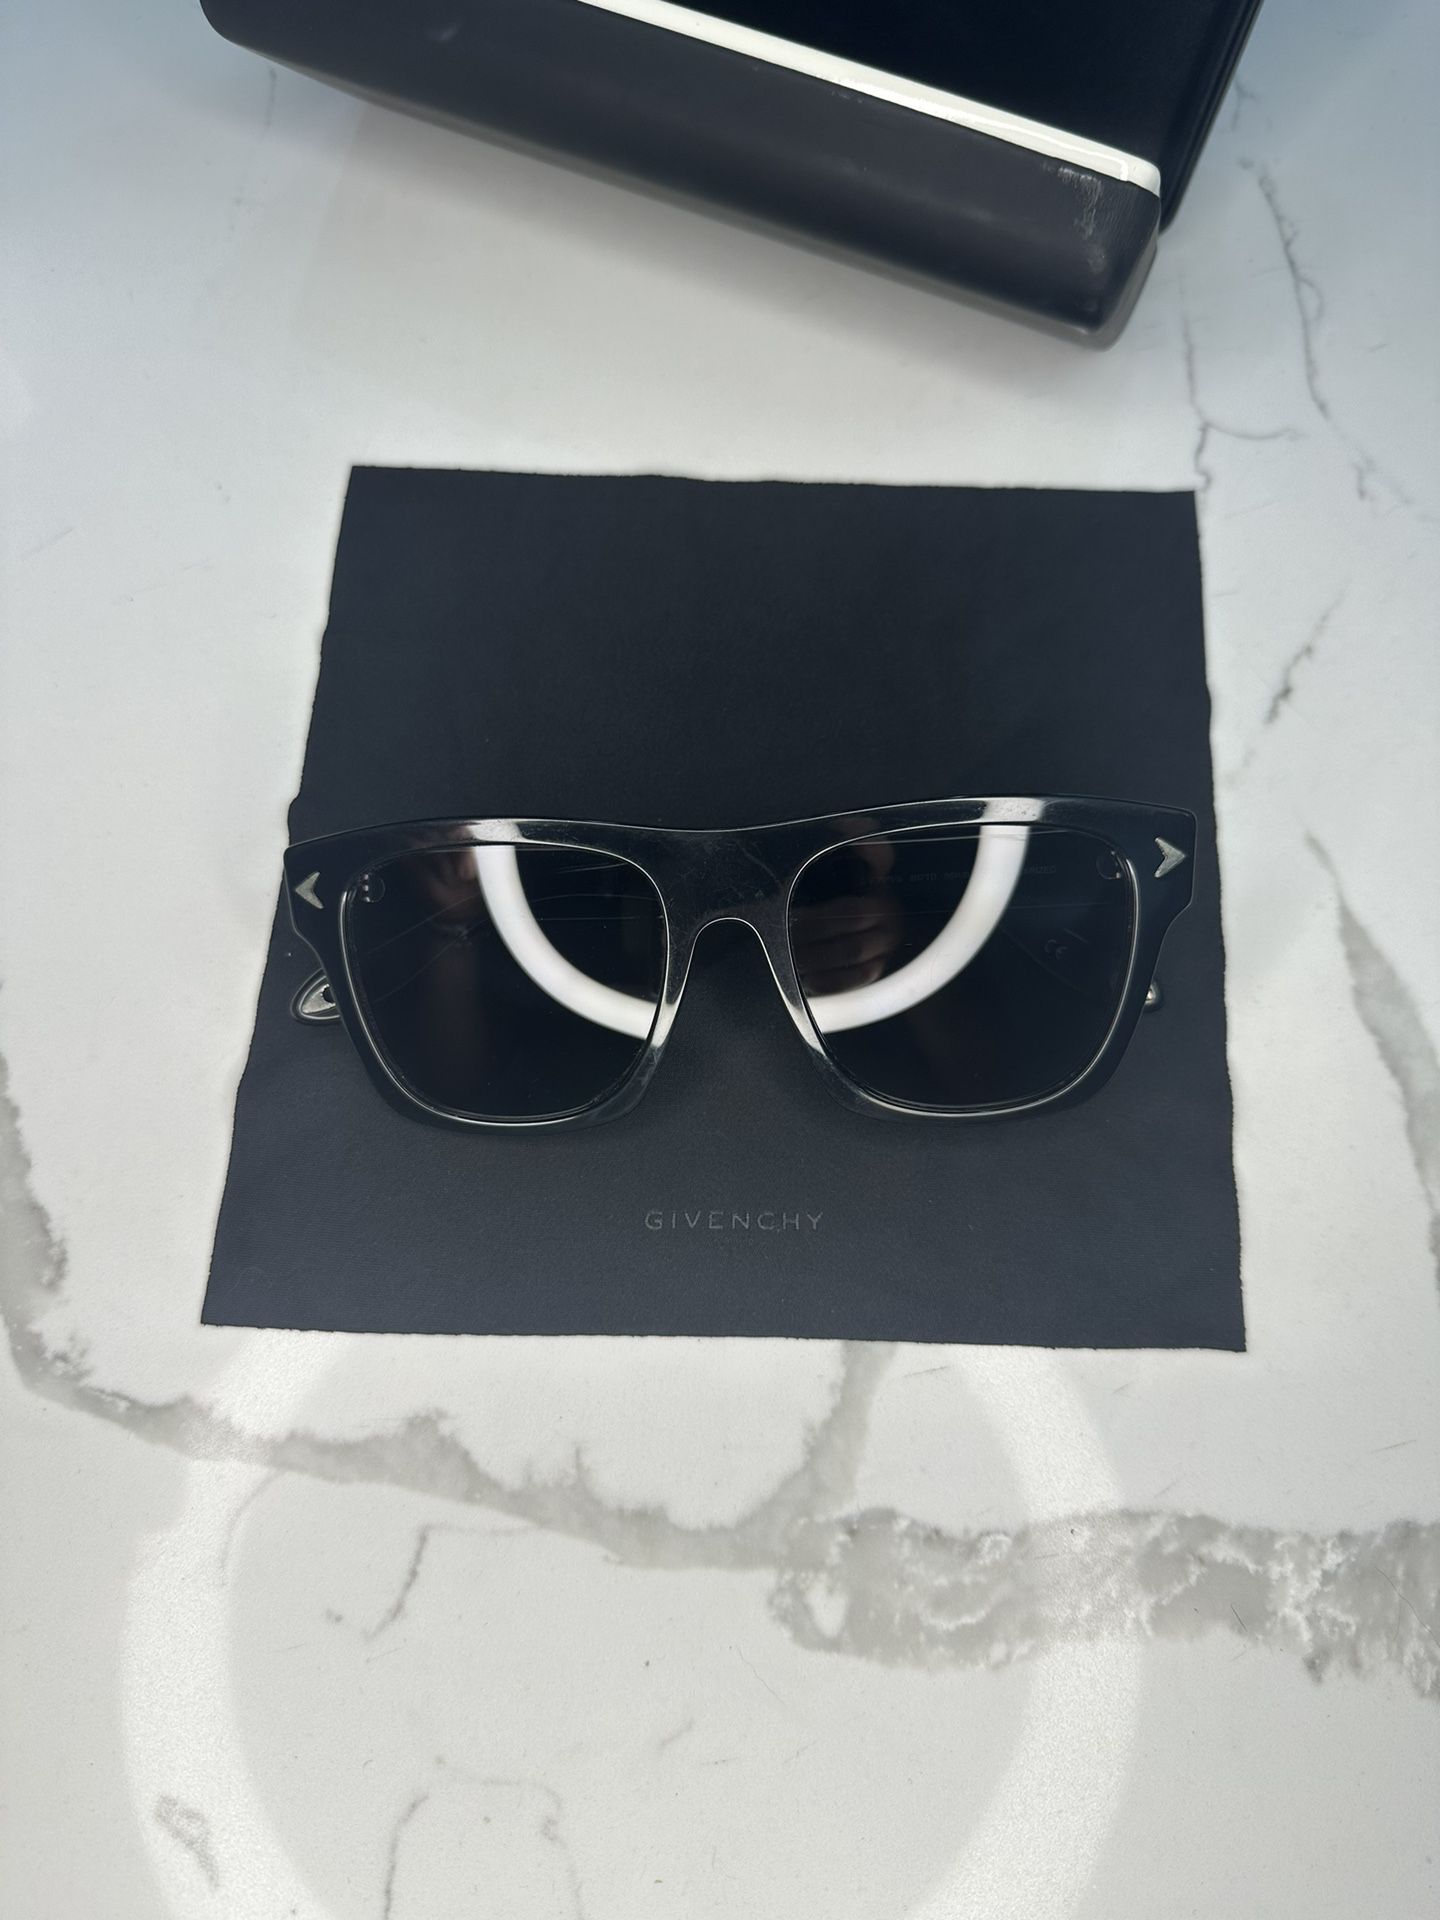 Givenchy GV 7011/S 807TD55019 150 Black Mens Sunglasses Vintage Rare Polarized